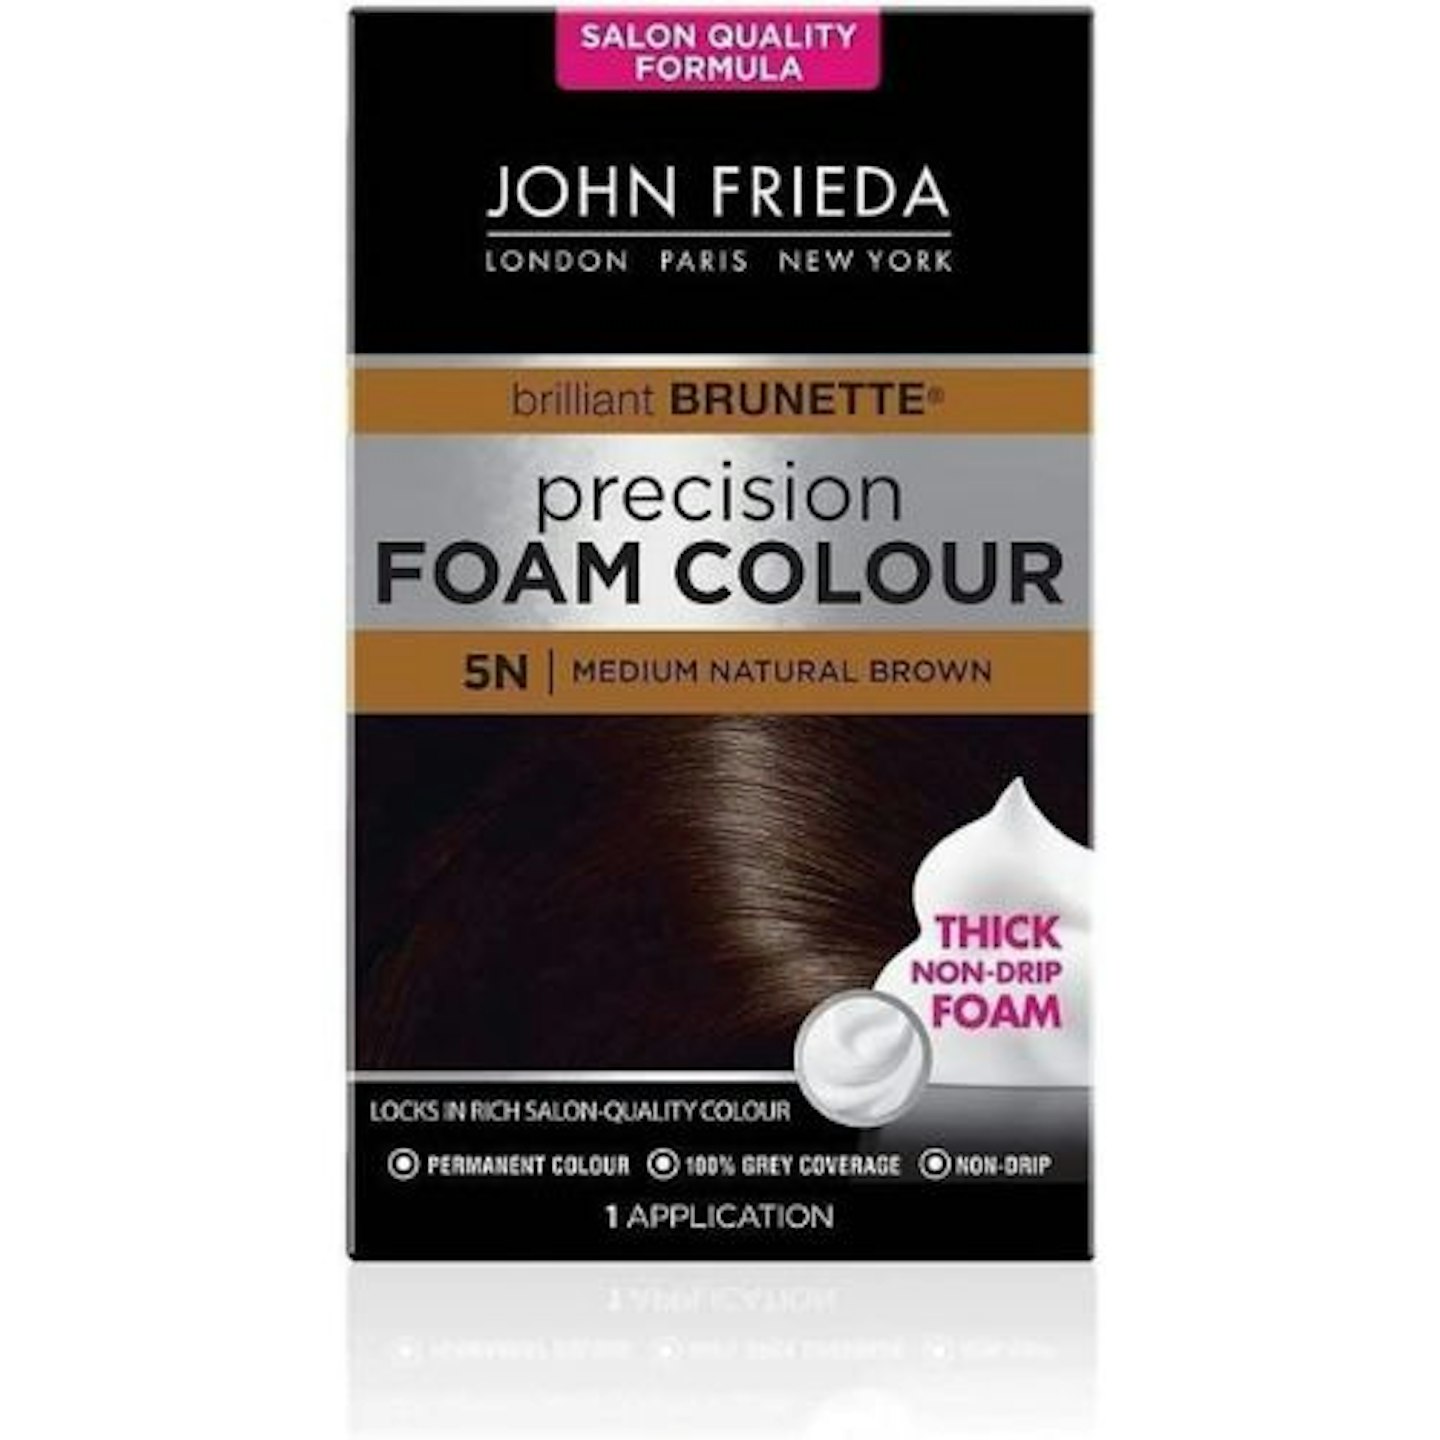 John Frieda Precision Foam Colour Hair Dye